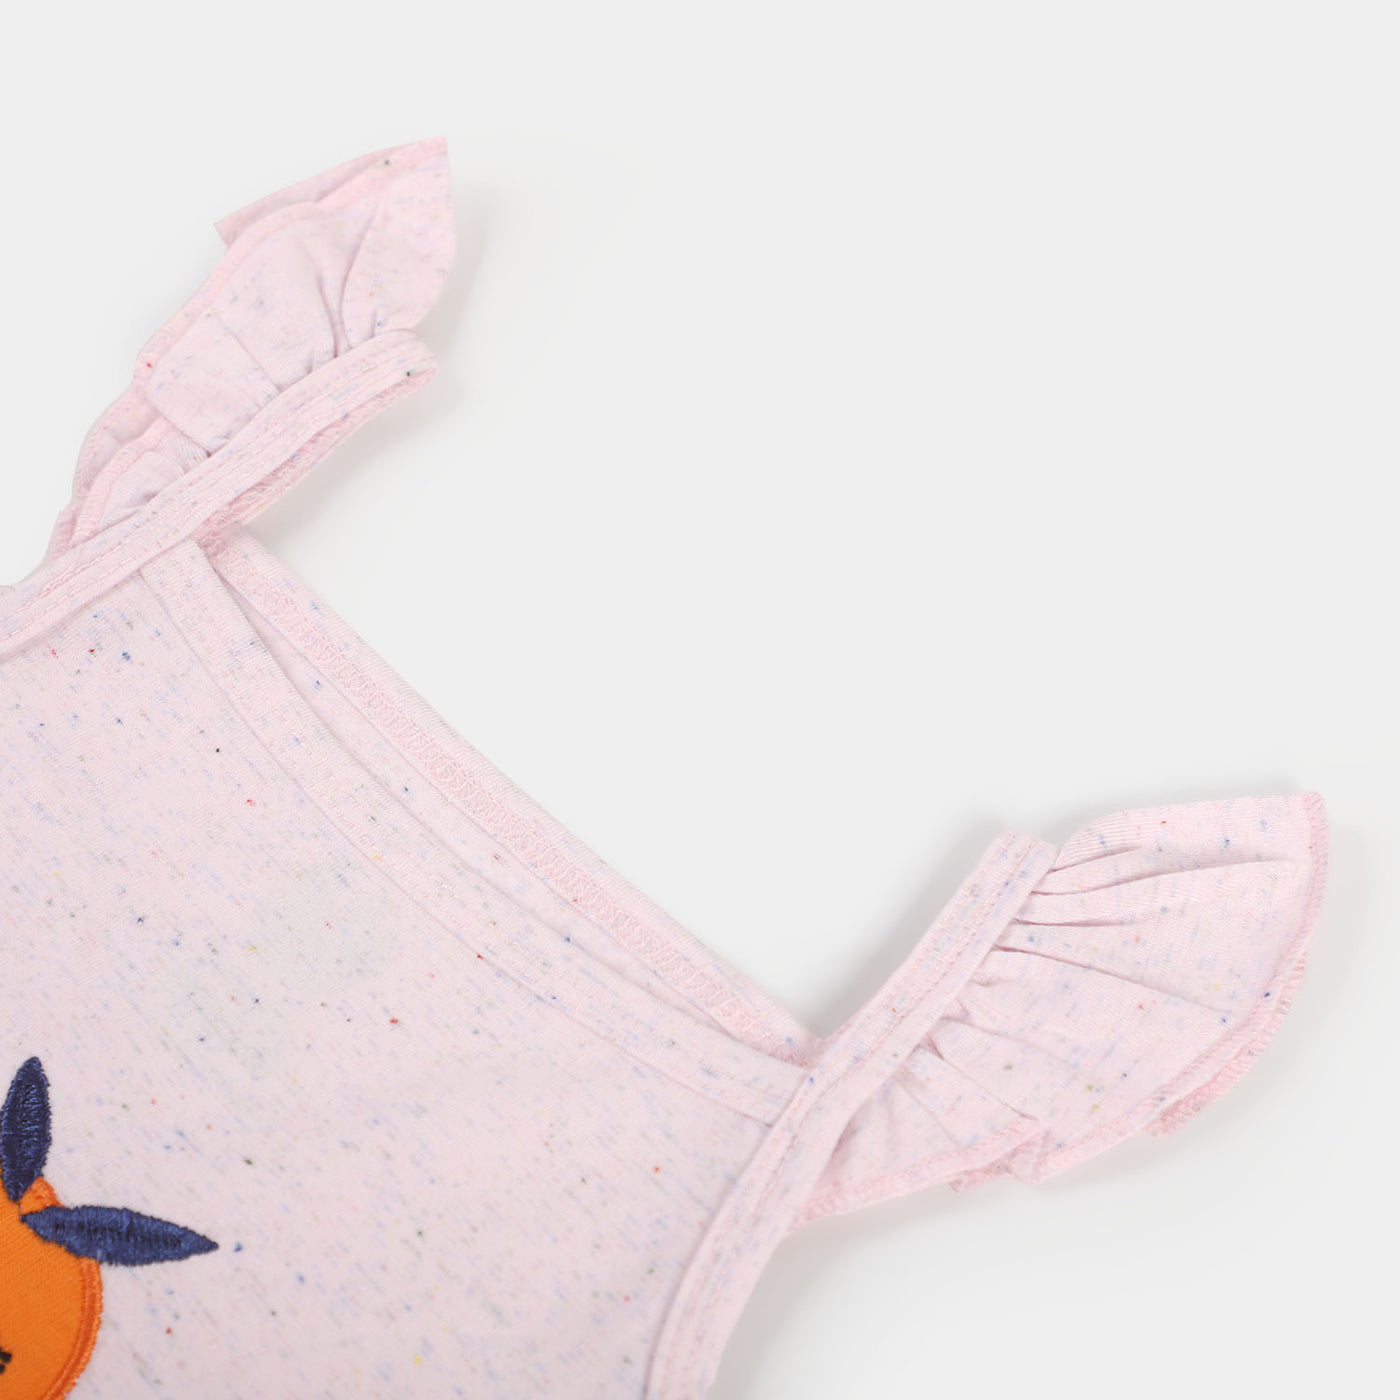 Infant Girls Knitted Romper Love You - S-Shell